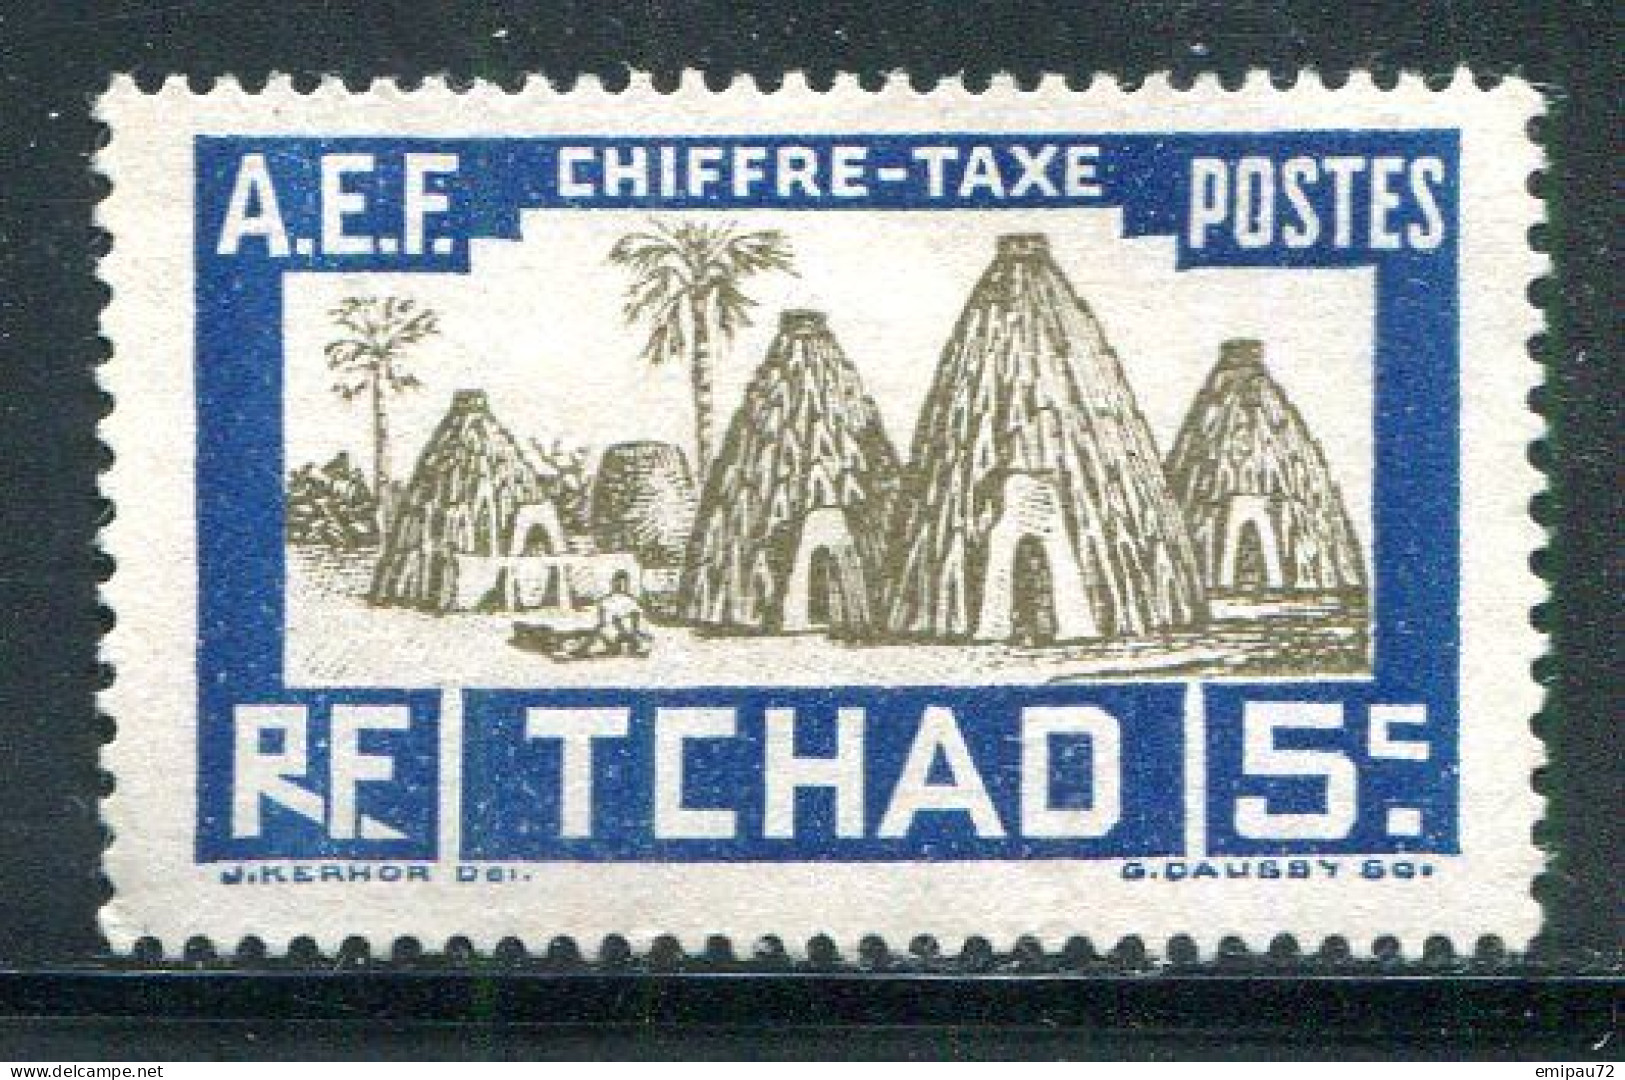 TCHAD- Taxe Y&T N°12- Neuf Sans Gomme - Ongebruikt